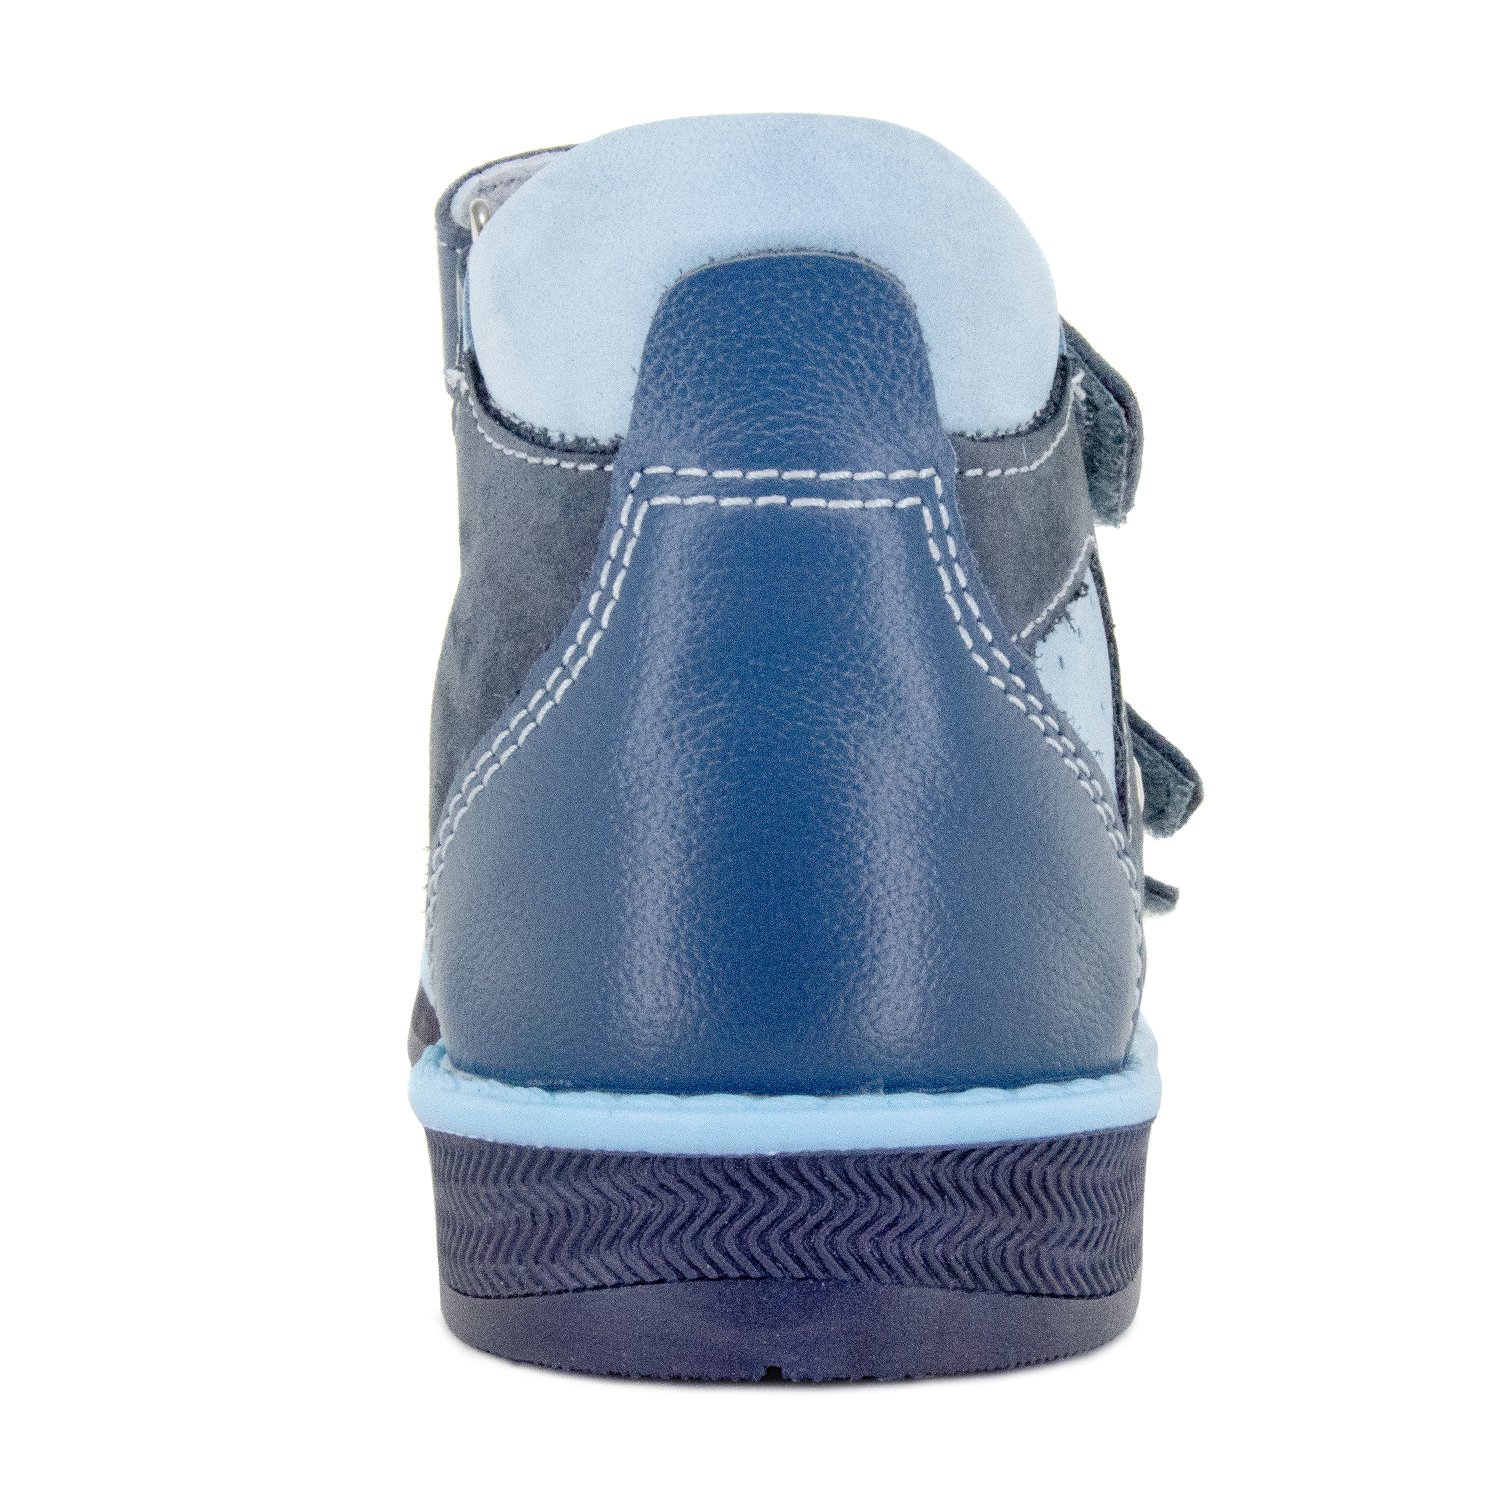 Детские сандалии ORTHOBOOM 25057-07 синий-голубой